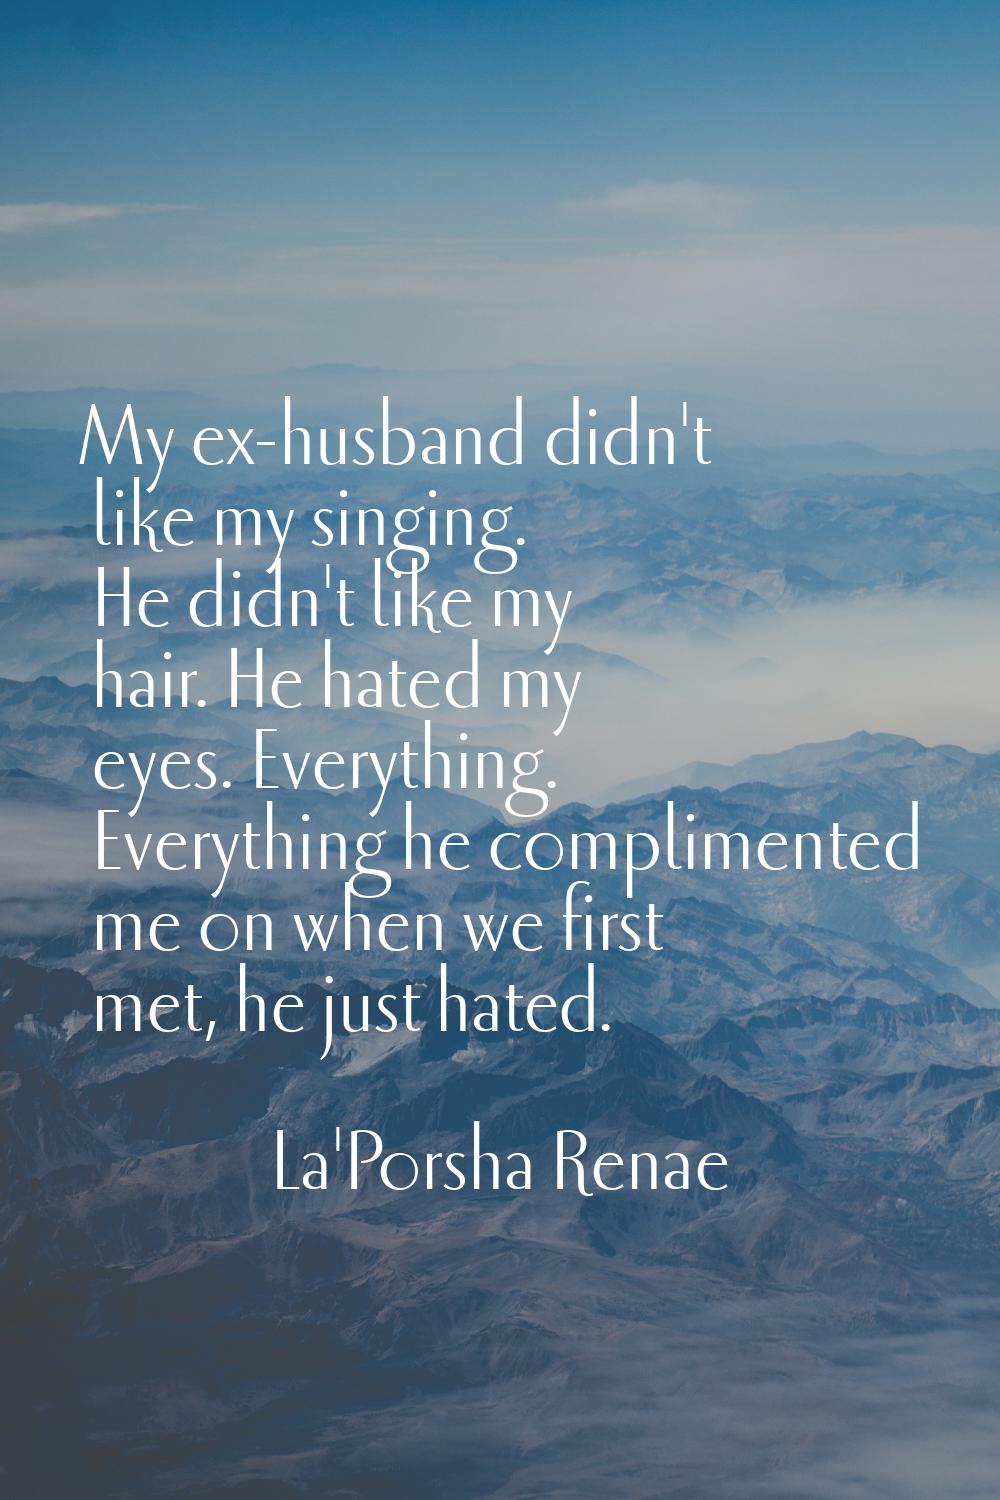 My ex-husband didn't like my singing. He didn't like my hair. He hated my eyes. Everything. Everyth